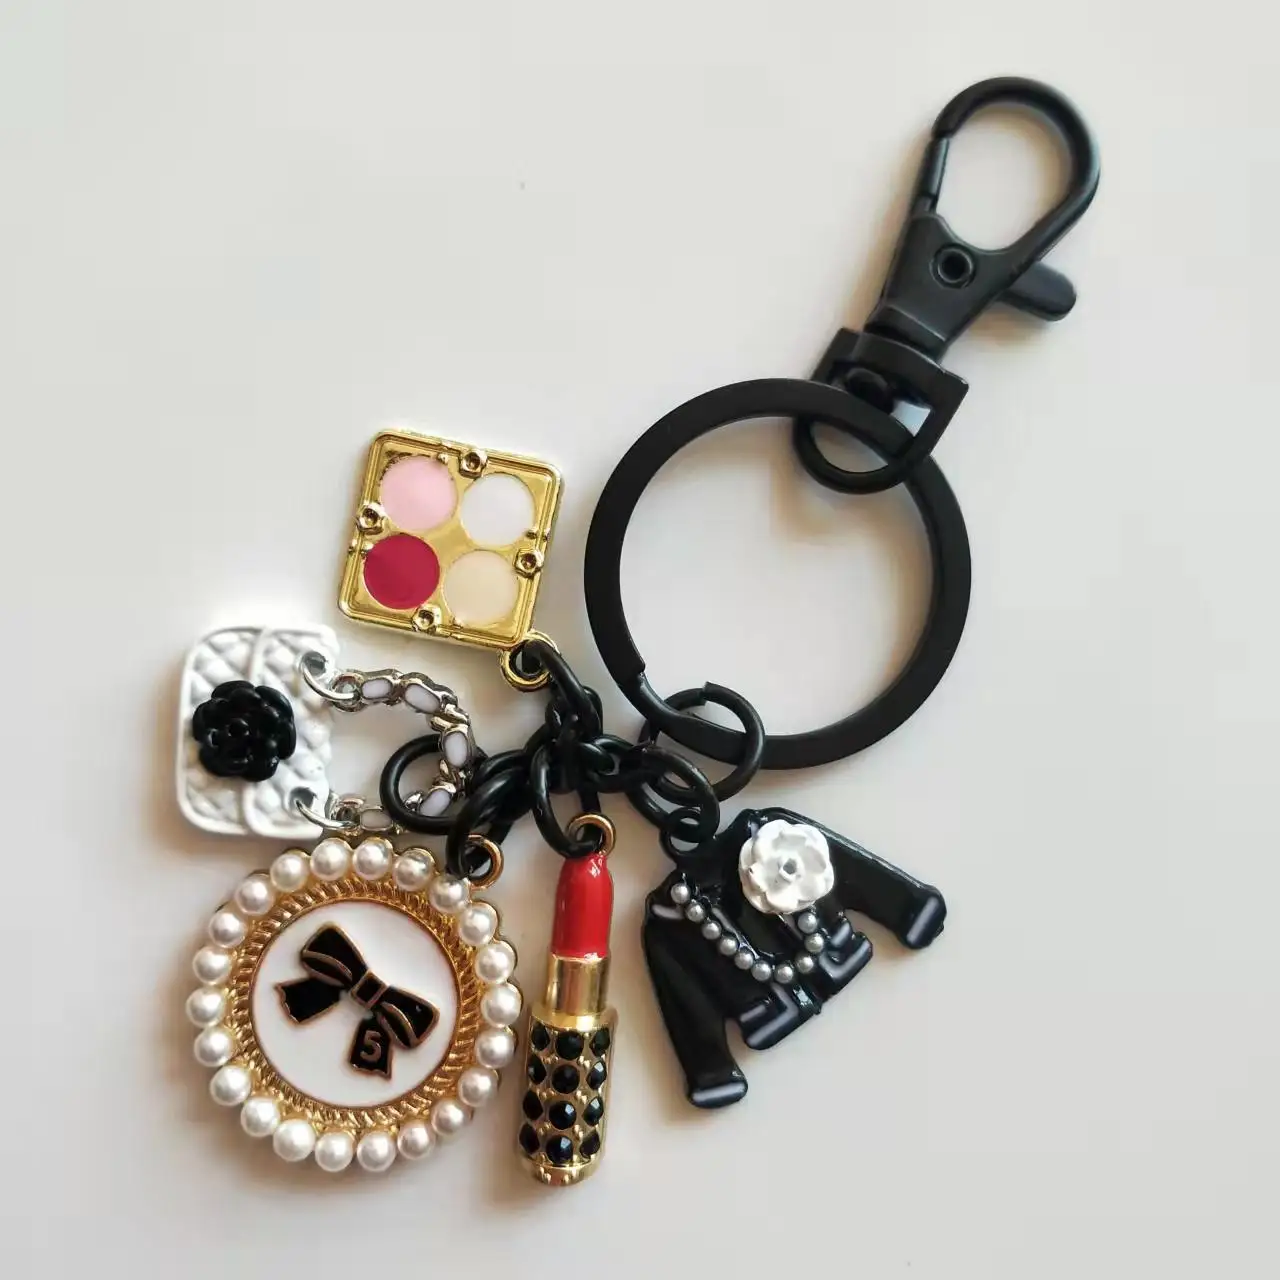 asleepingsheep Camellia Flowers Bag Charm Keychain Key Ring Car Charm Black.White Handmade New